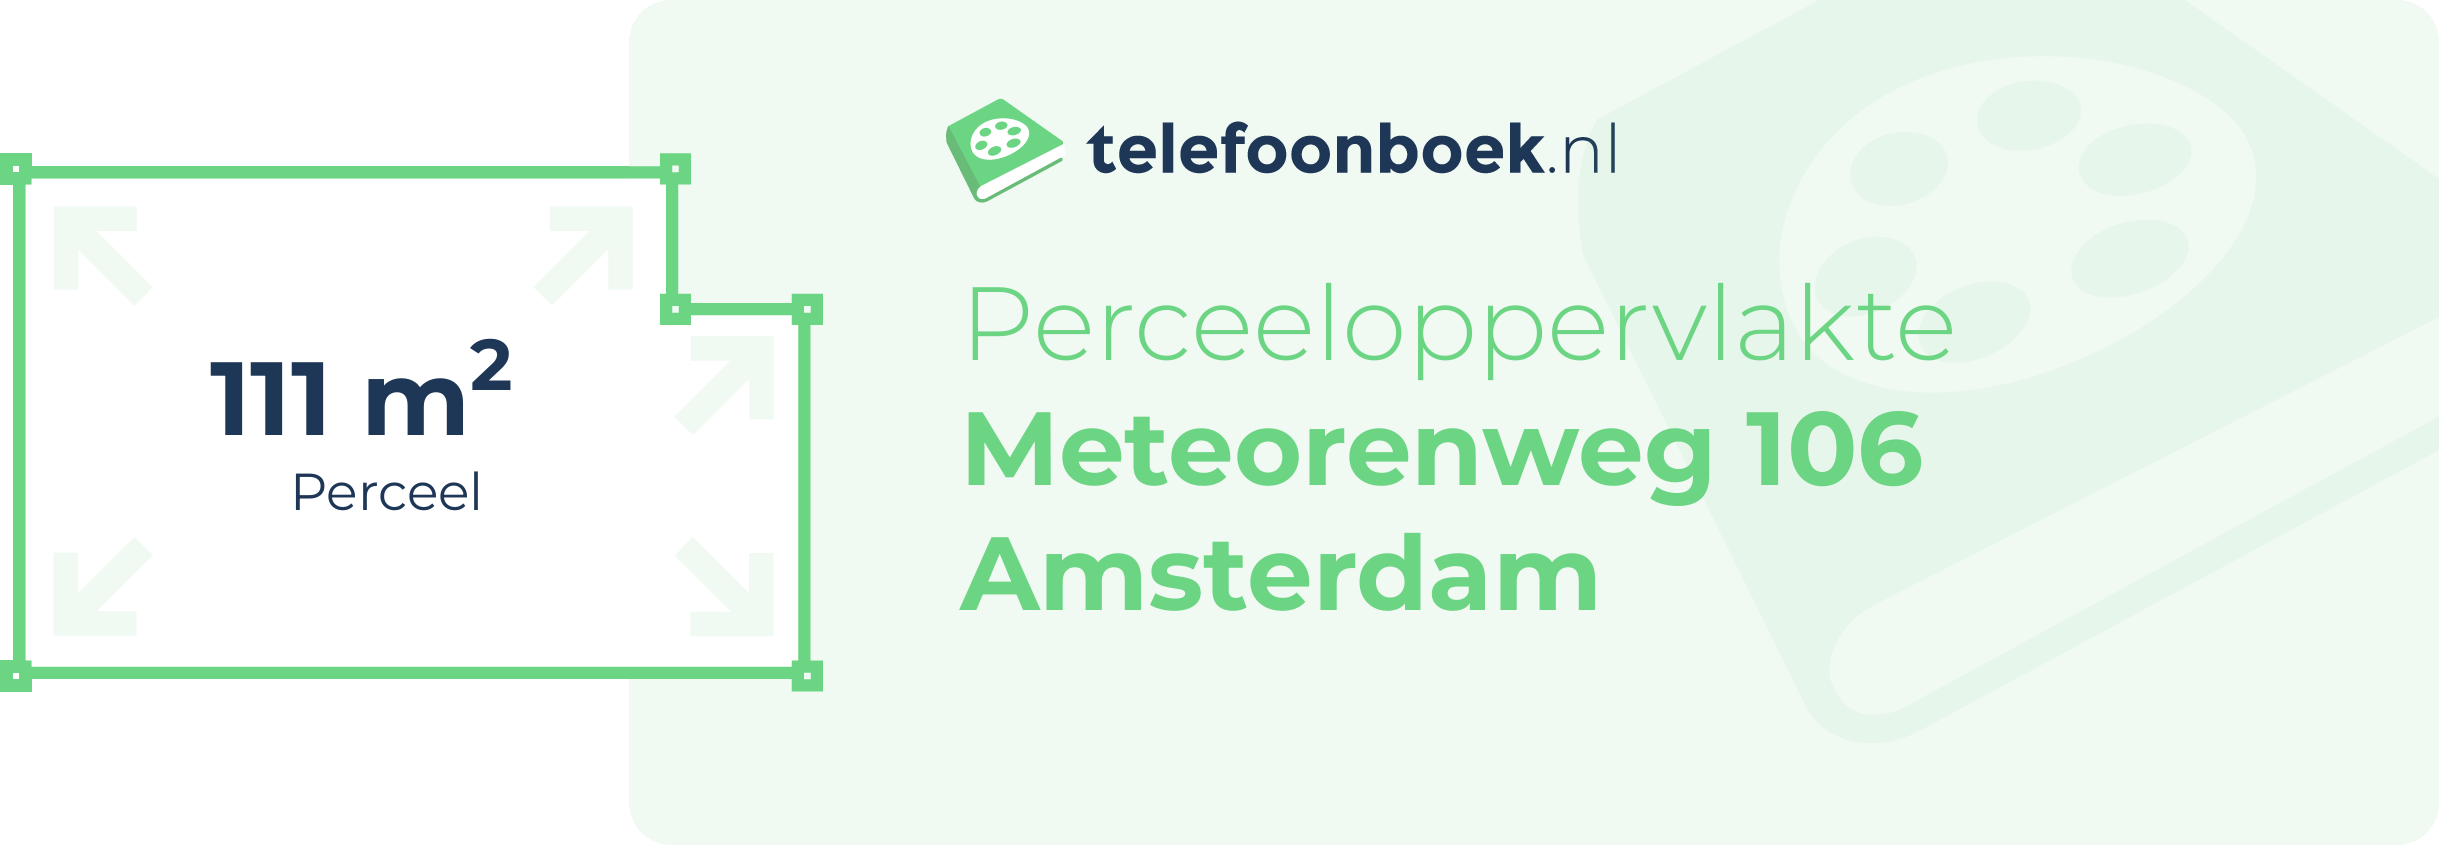 Perceeloppervlakte Meteorenweg 106 Amsterdam